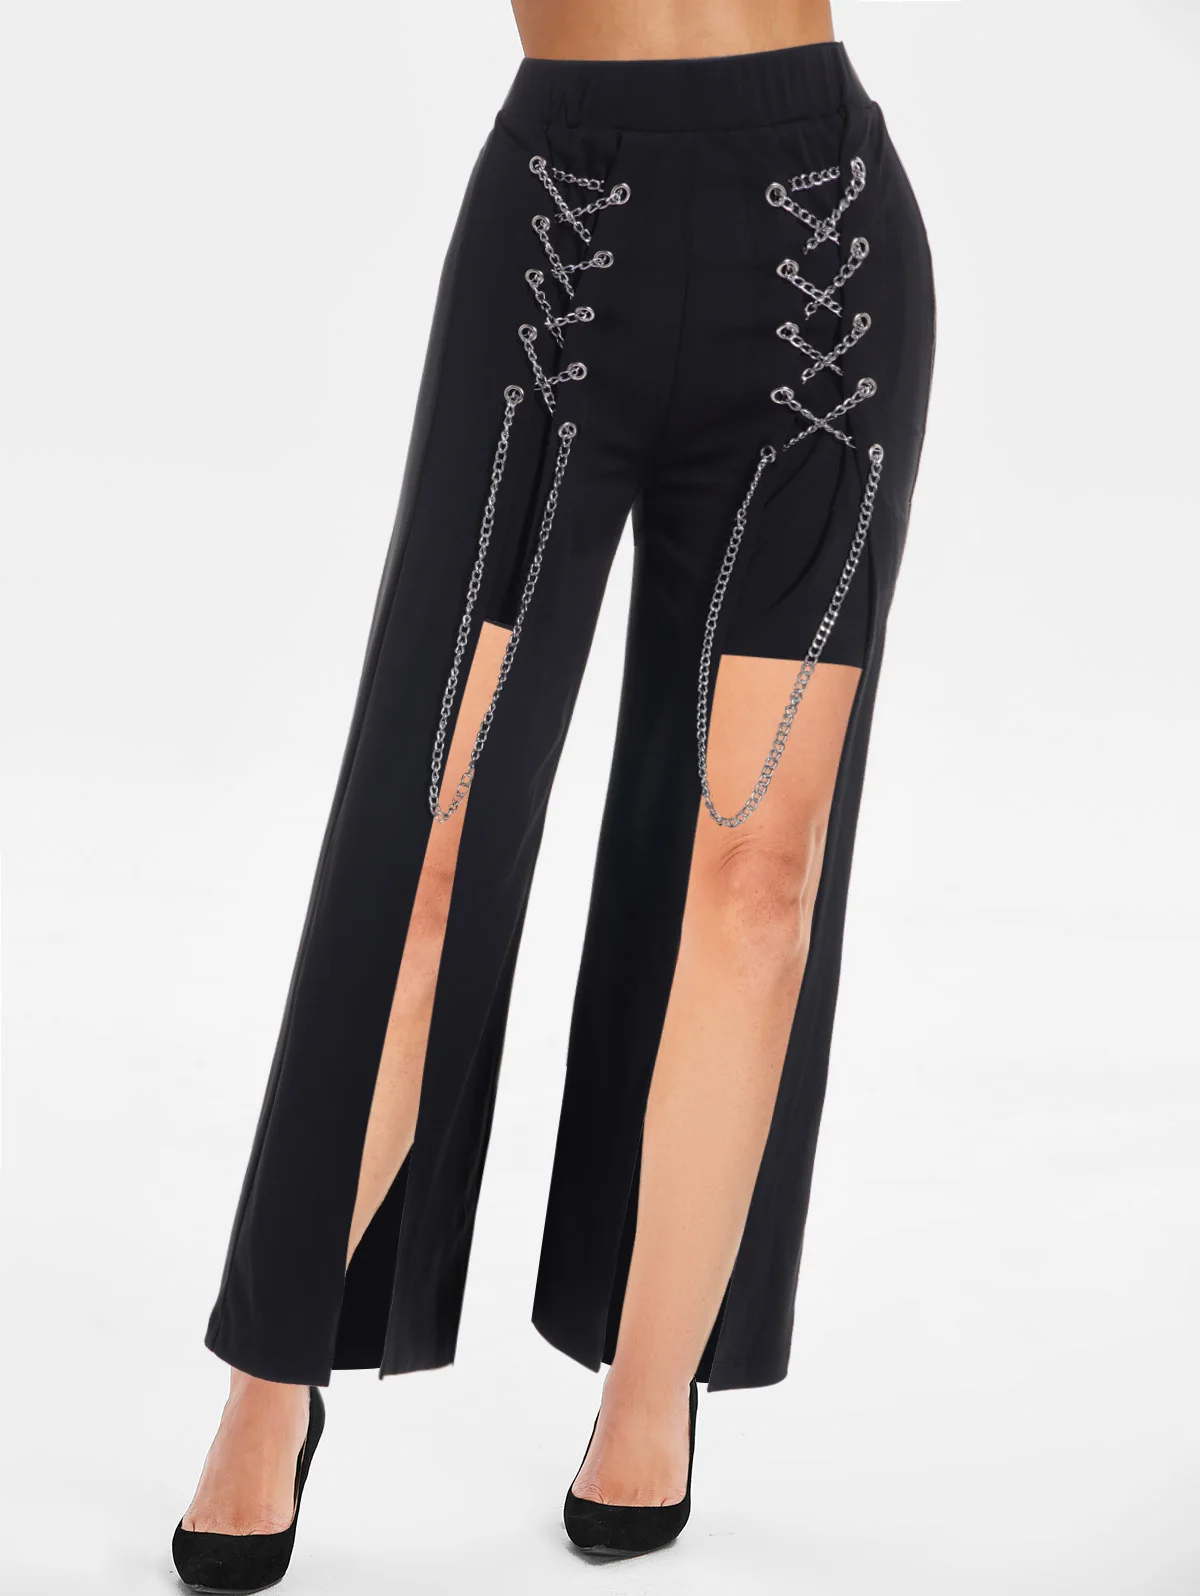 

Dressfo Solid Black Chain Lace Up High Slit Wide Leg Pants For Femal Elastic Waist Long Loose Pants